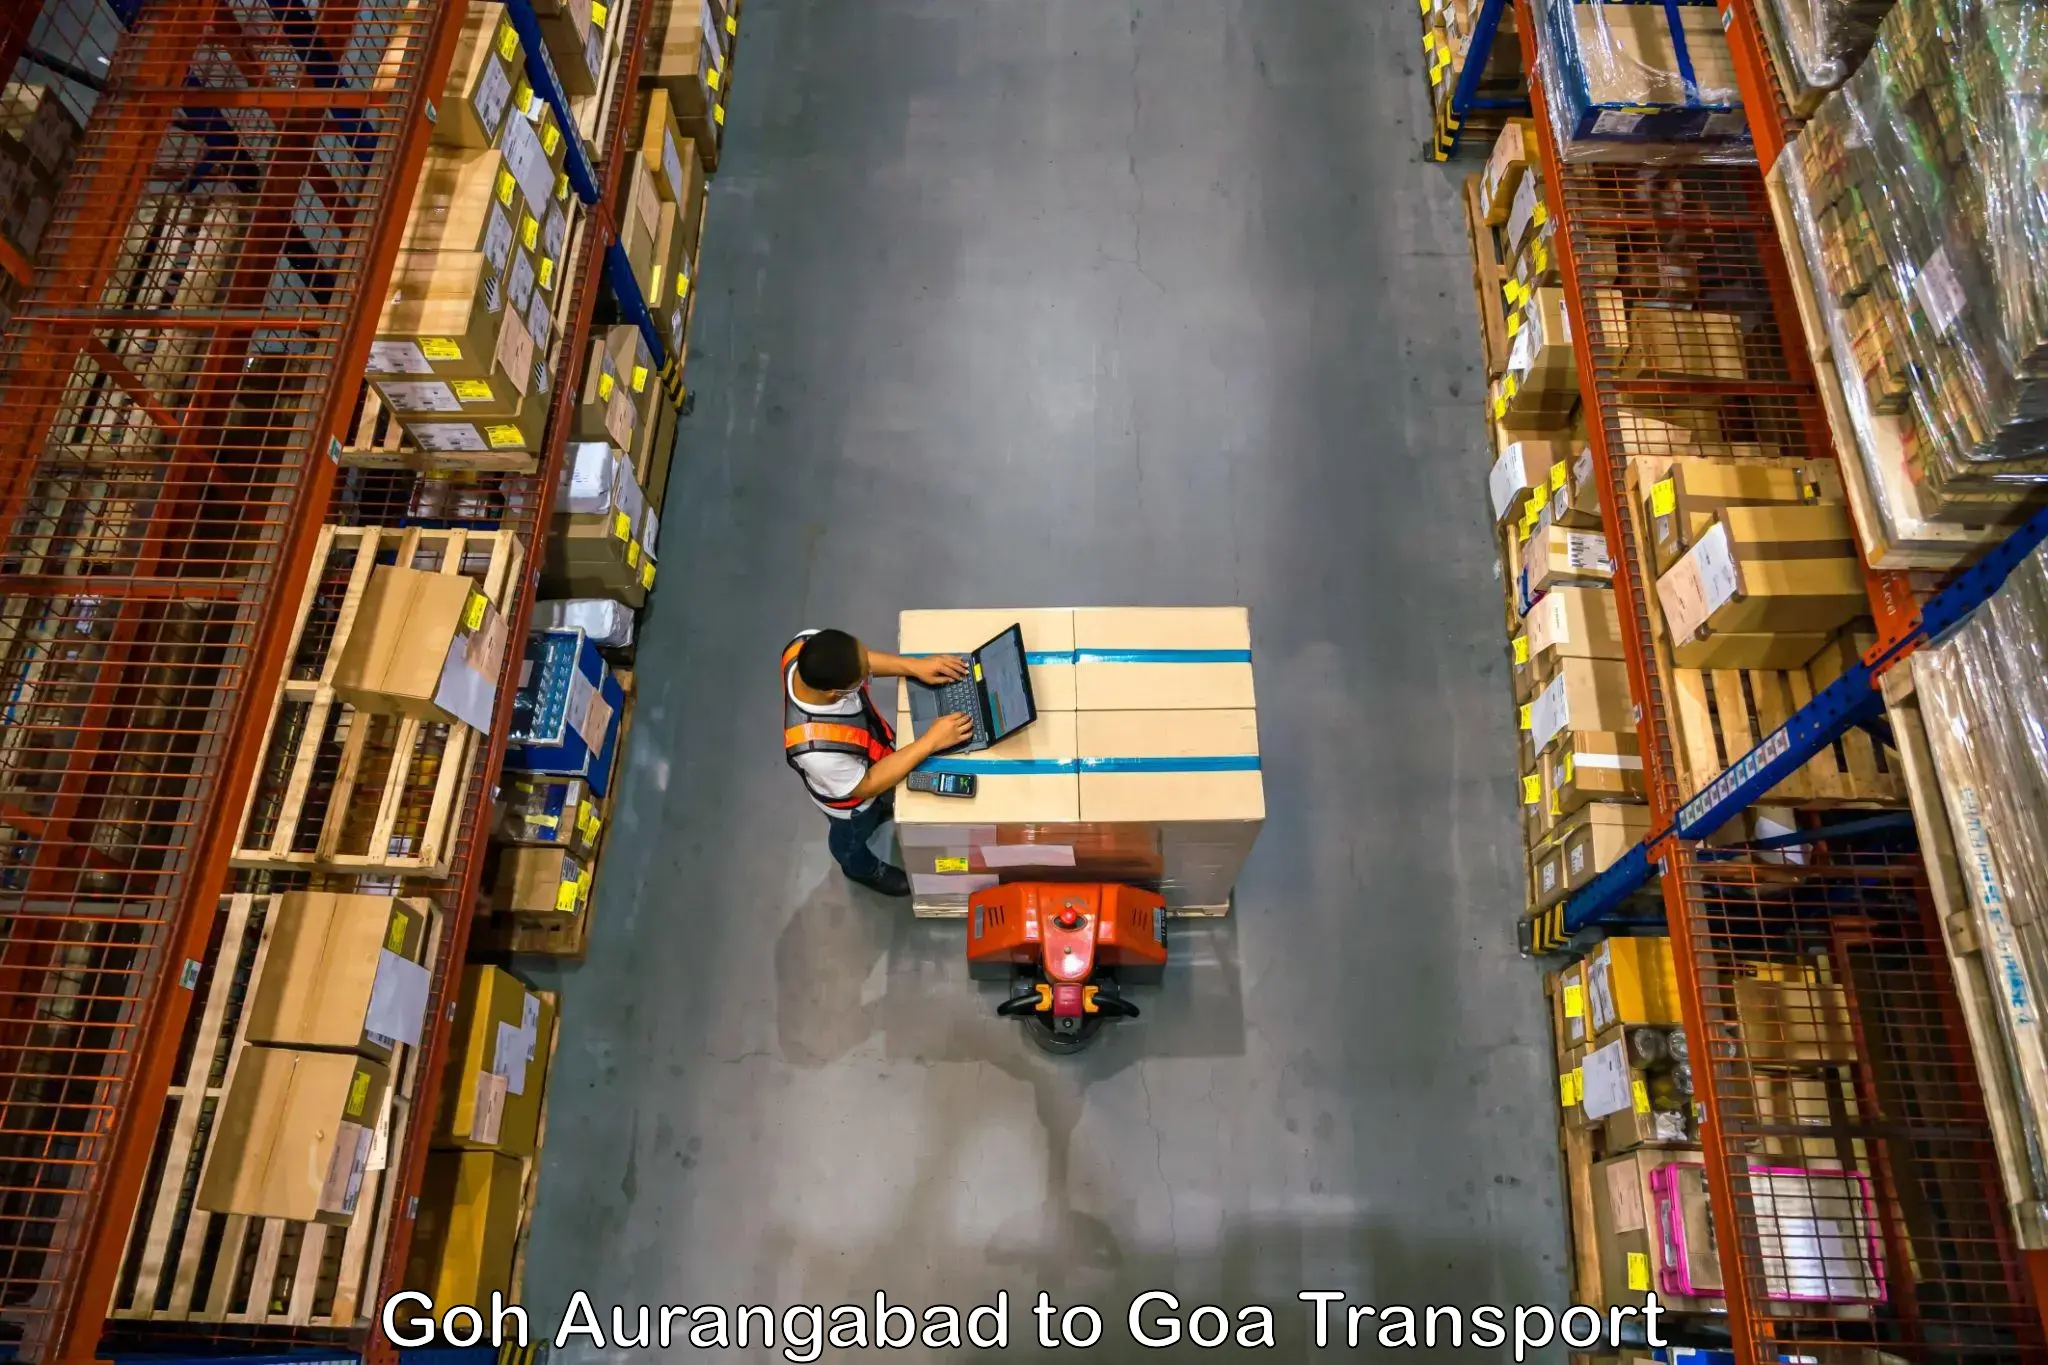 Transport in sharing Goh Aurangabad to South Goa